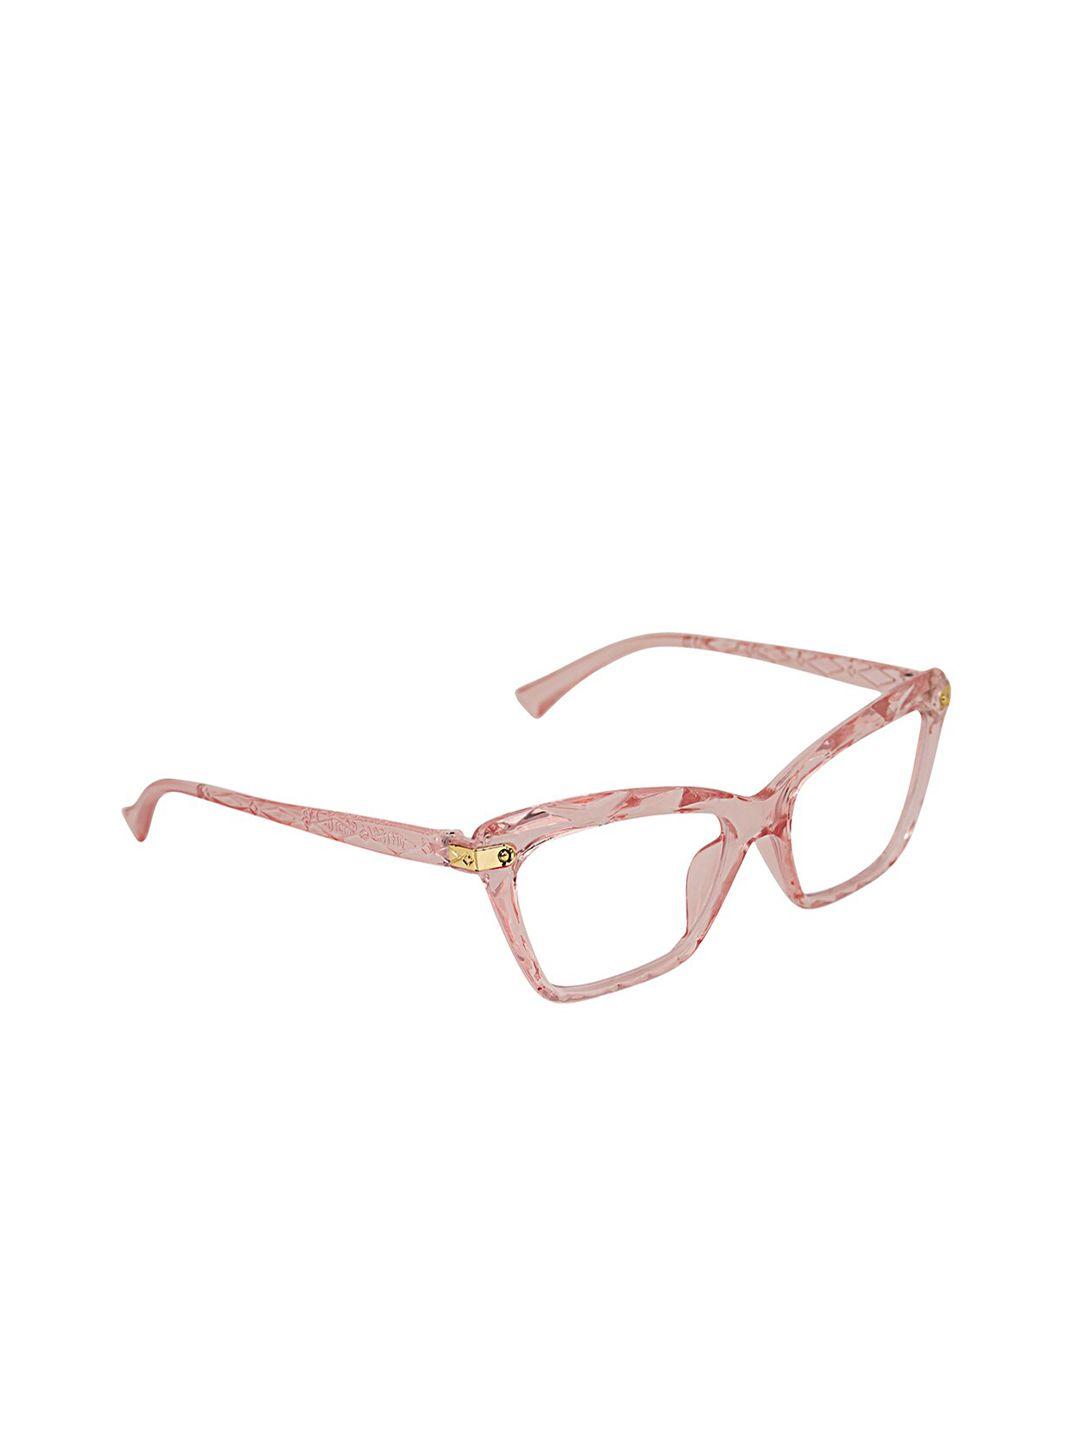 peter jones eyewear unisex pink full rim cateye frames with light blocking ag18041pk